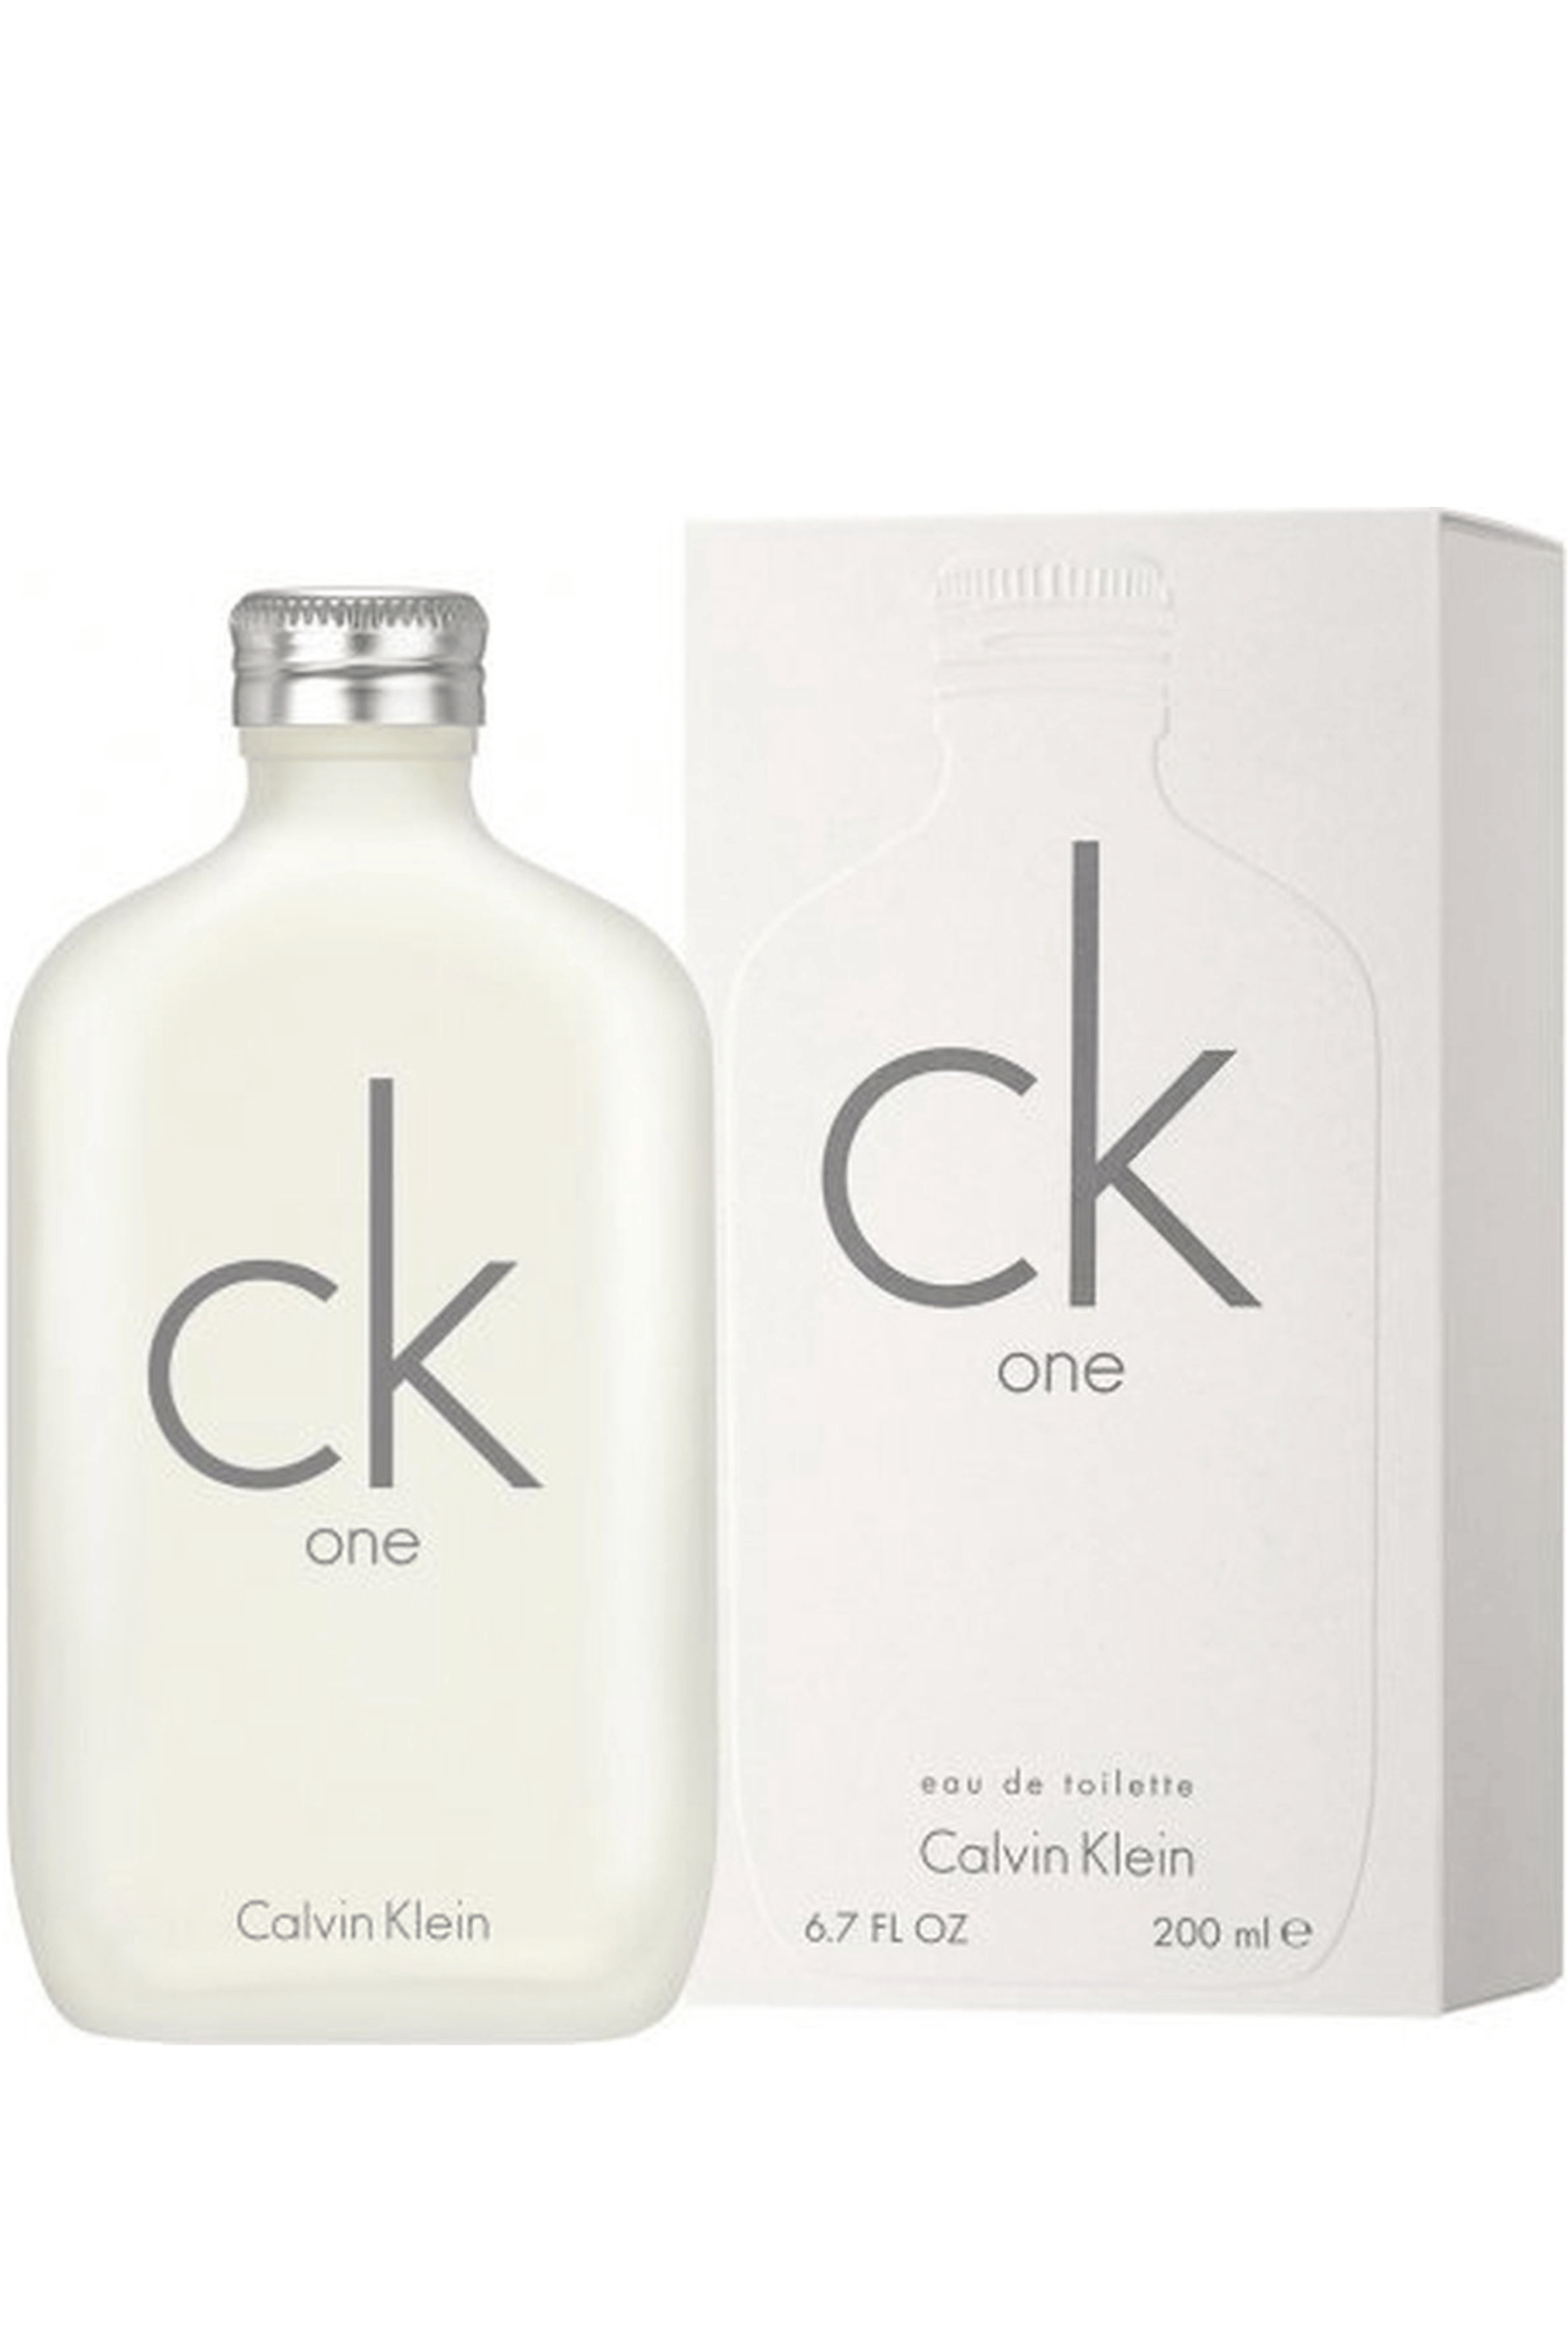 Calvin Klein CK One Eau de Toilette - REBL